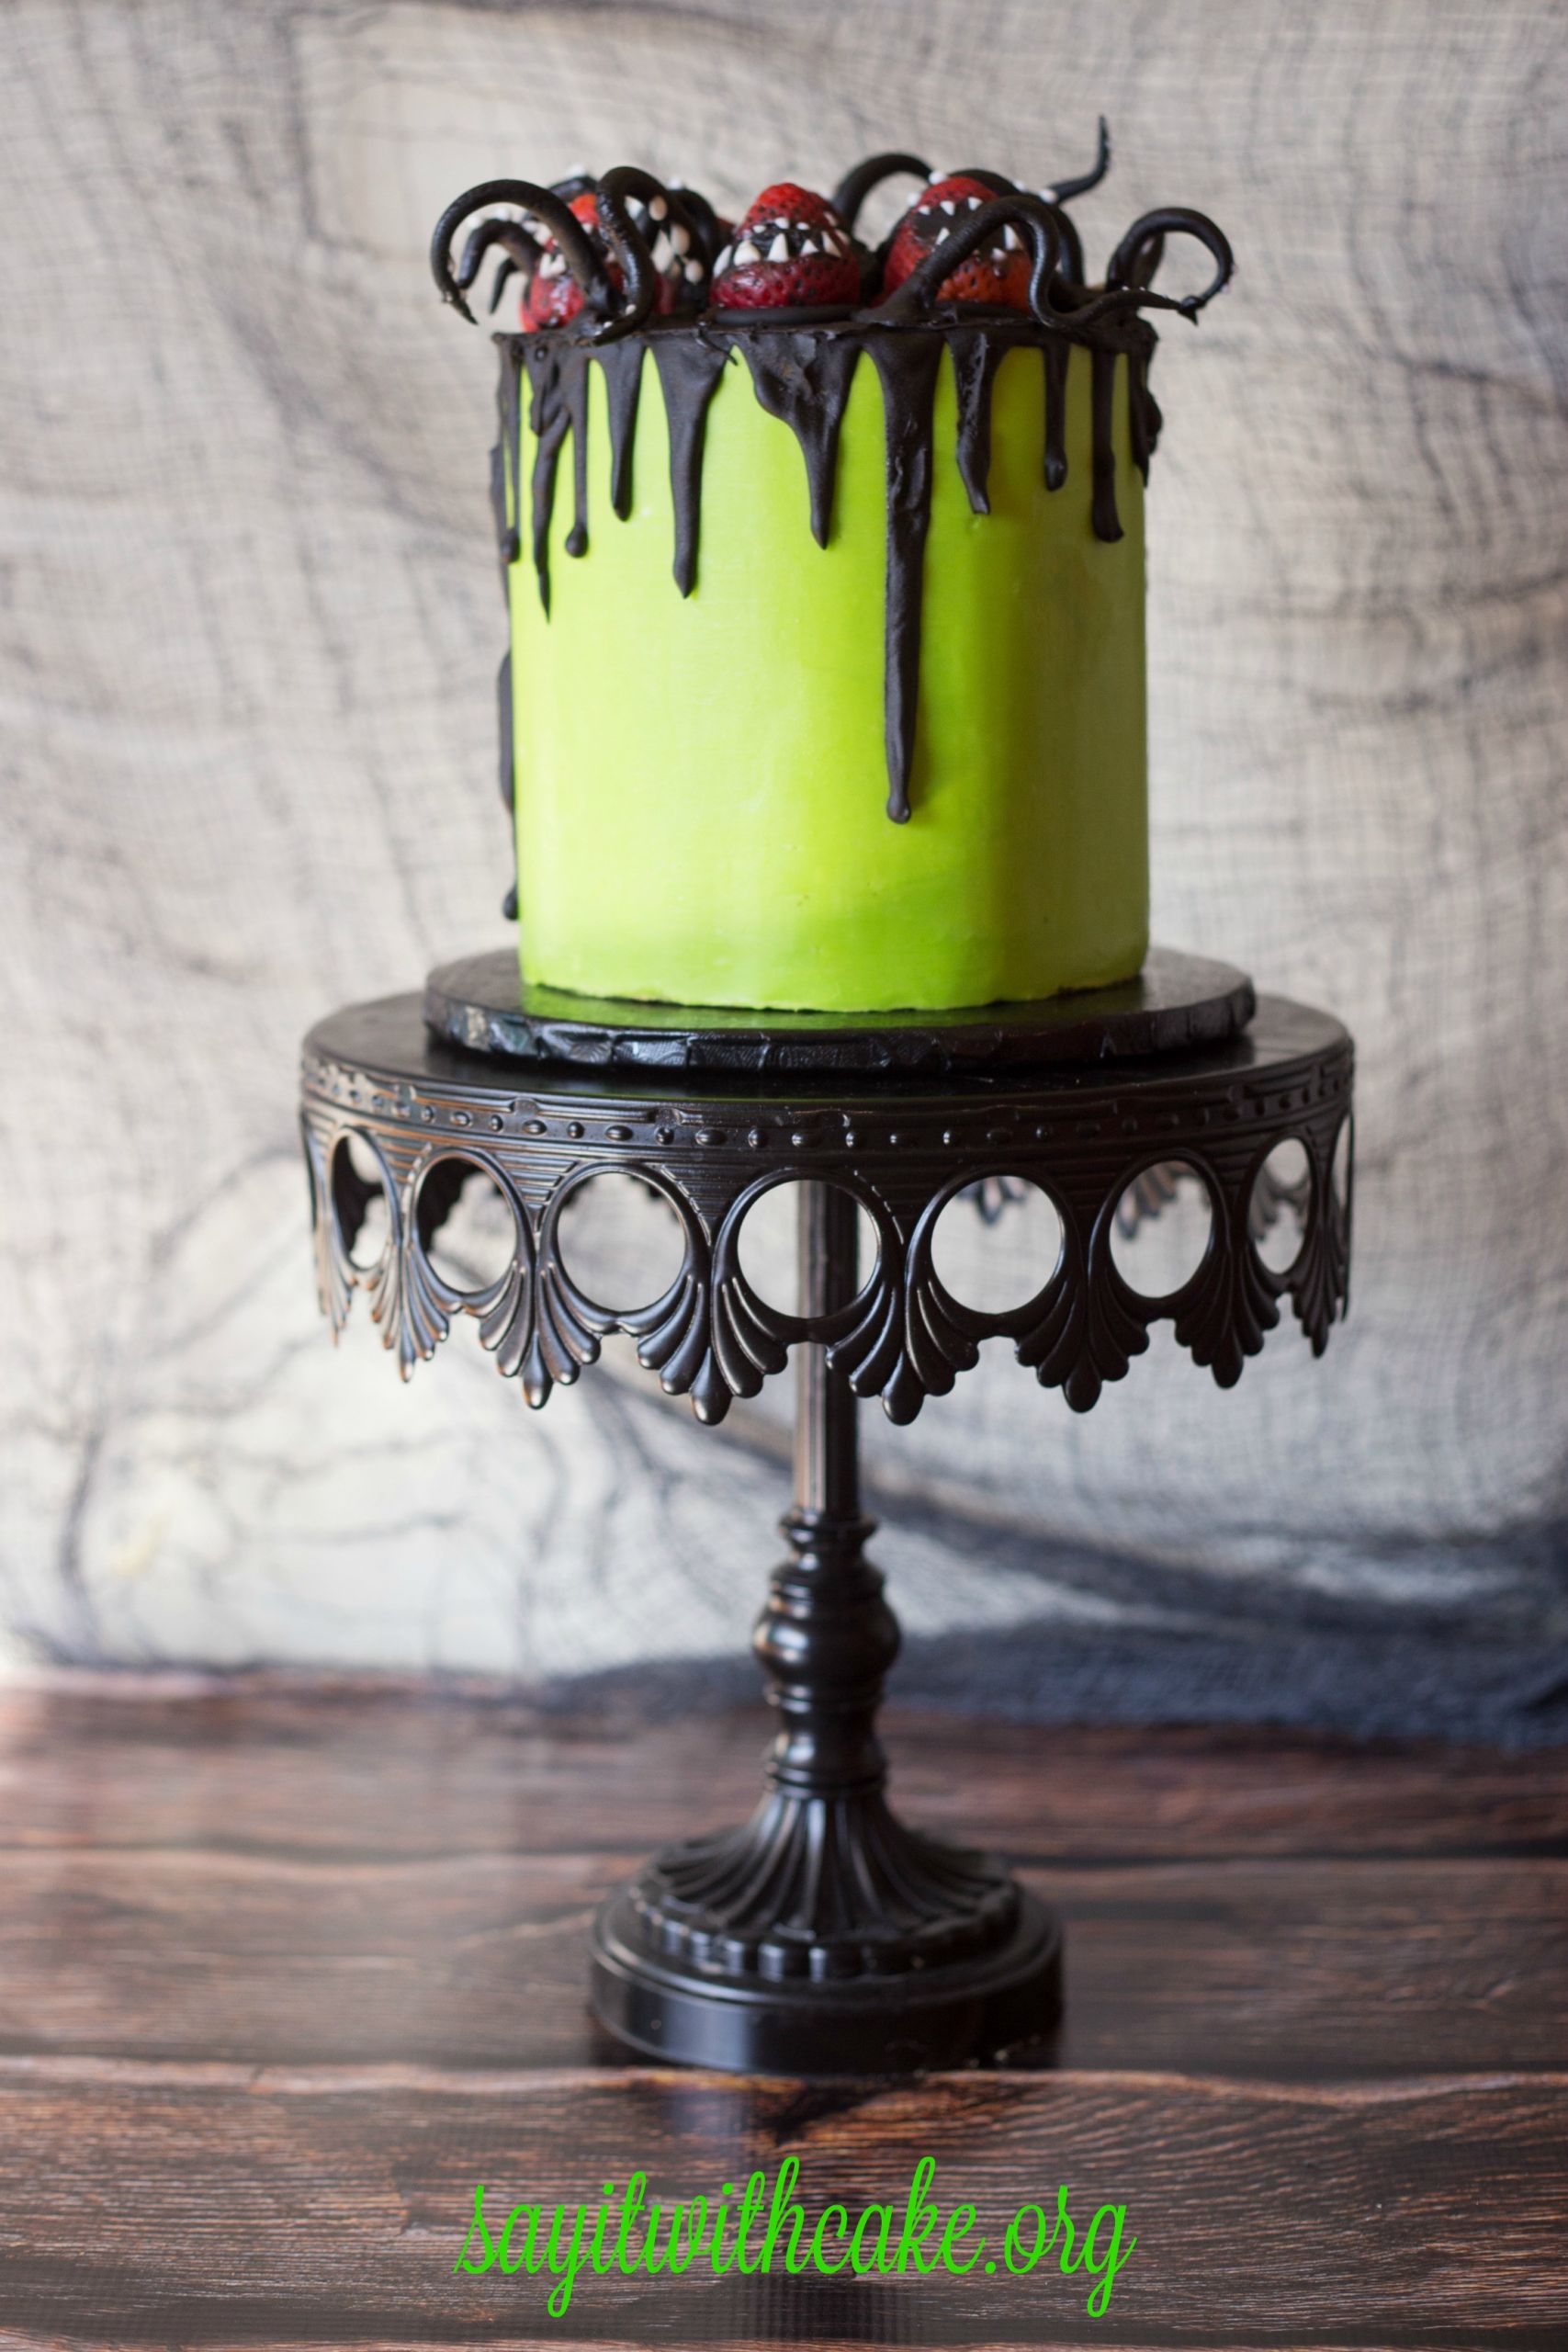 Scarey Halloween Cakes
 Creepy Halloween Cake – Say it With Cake